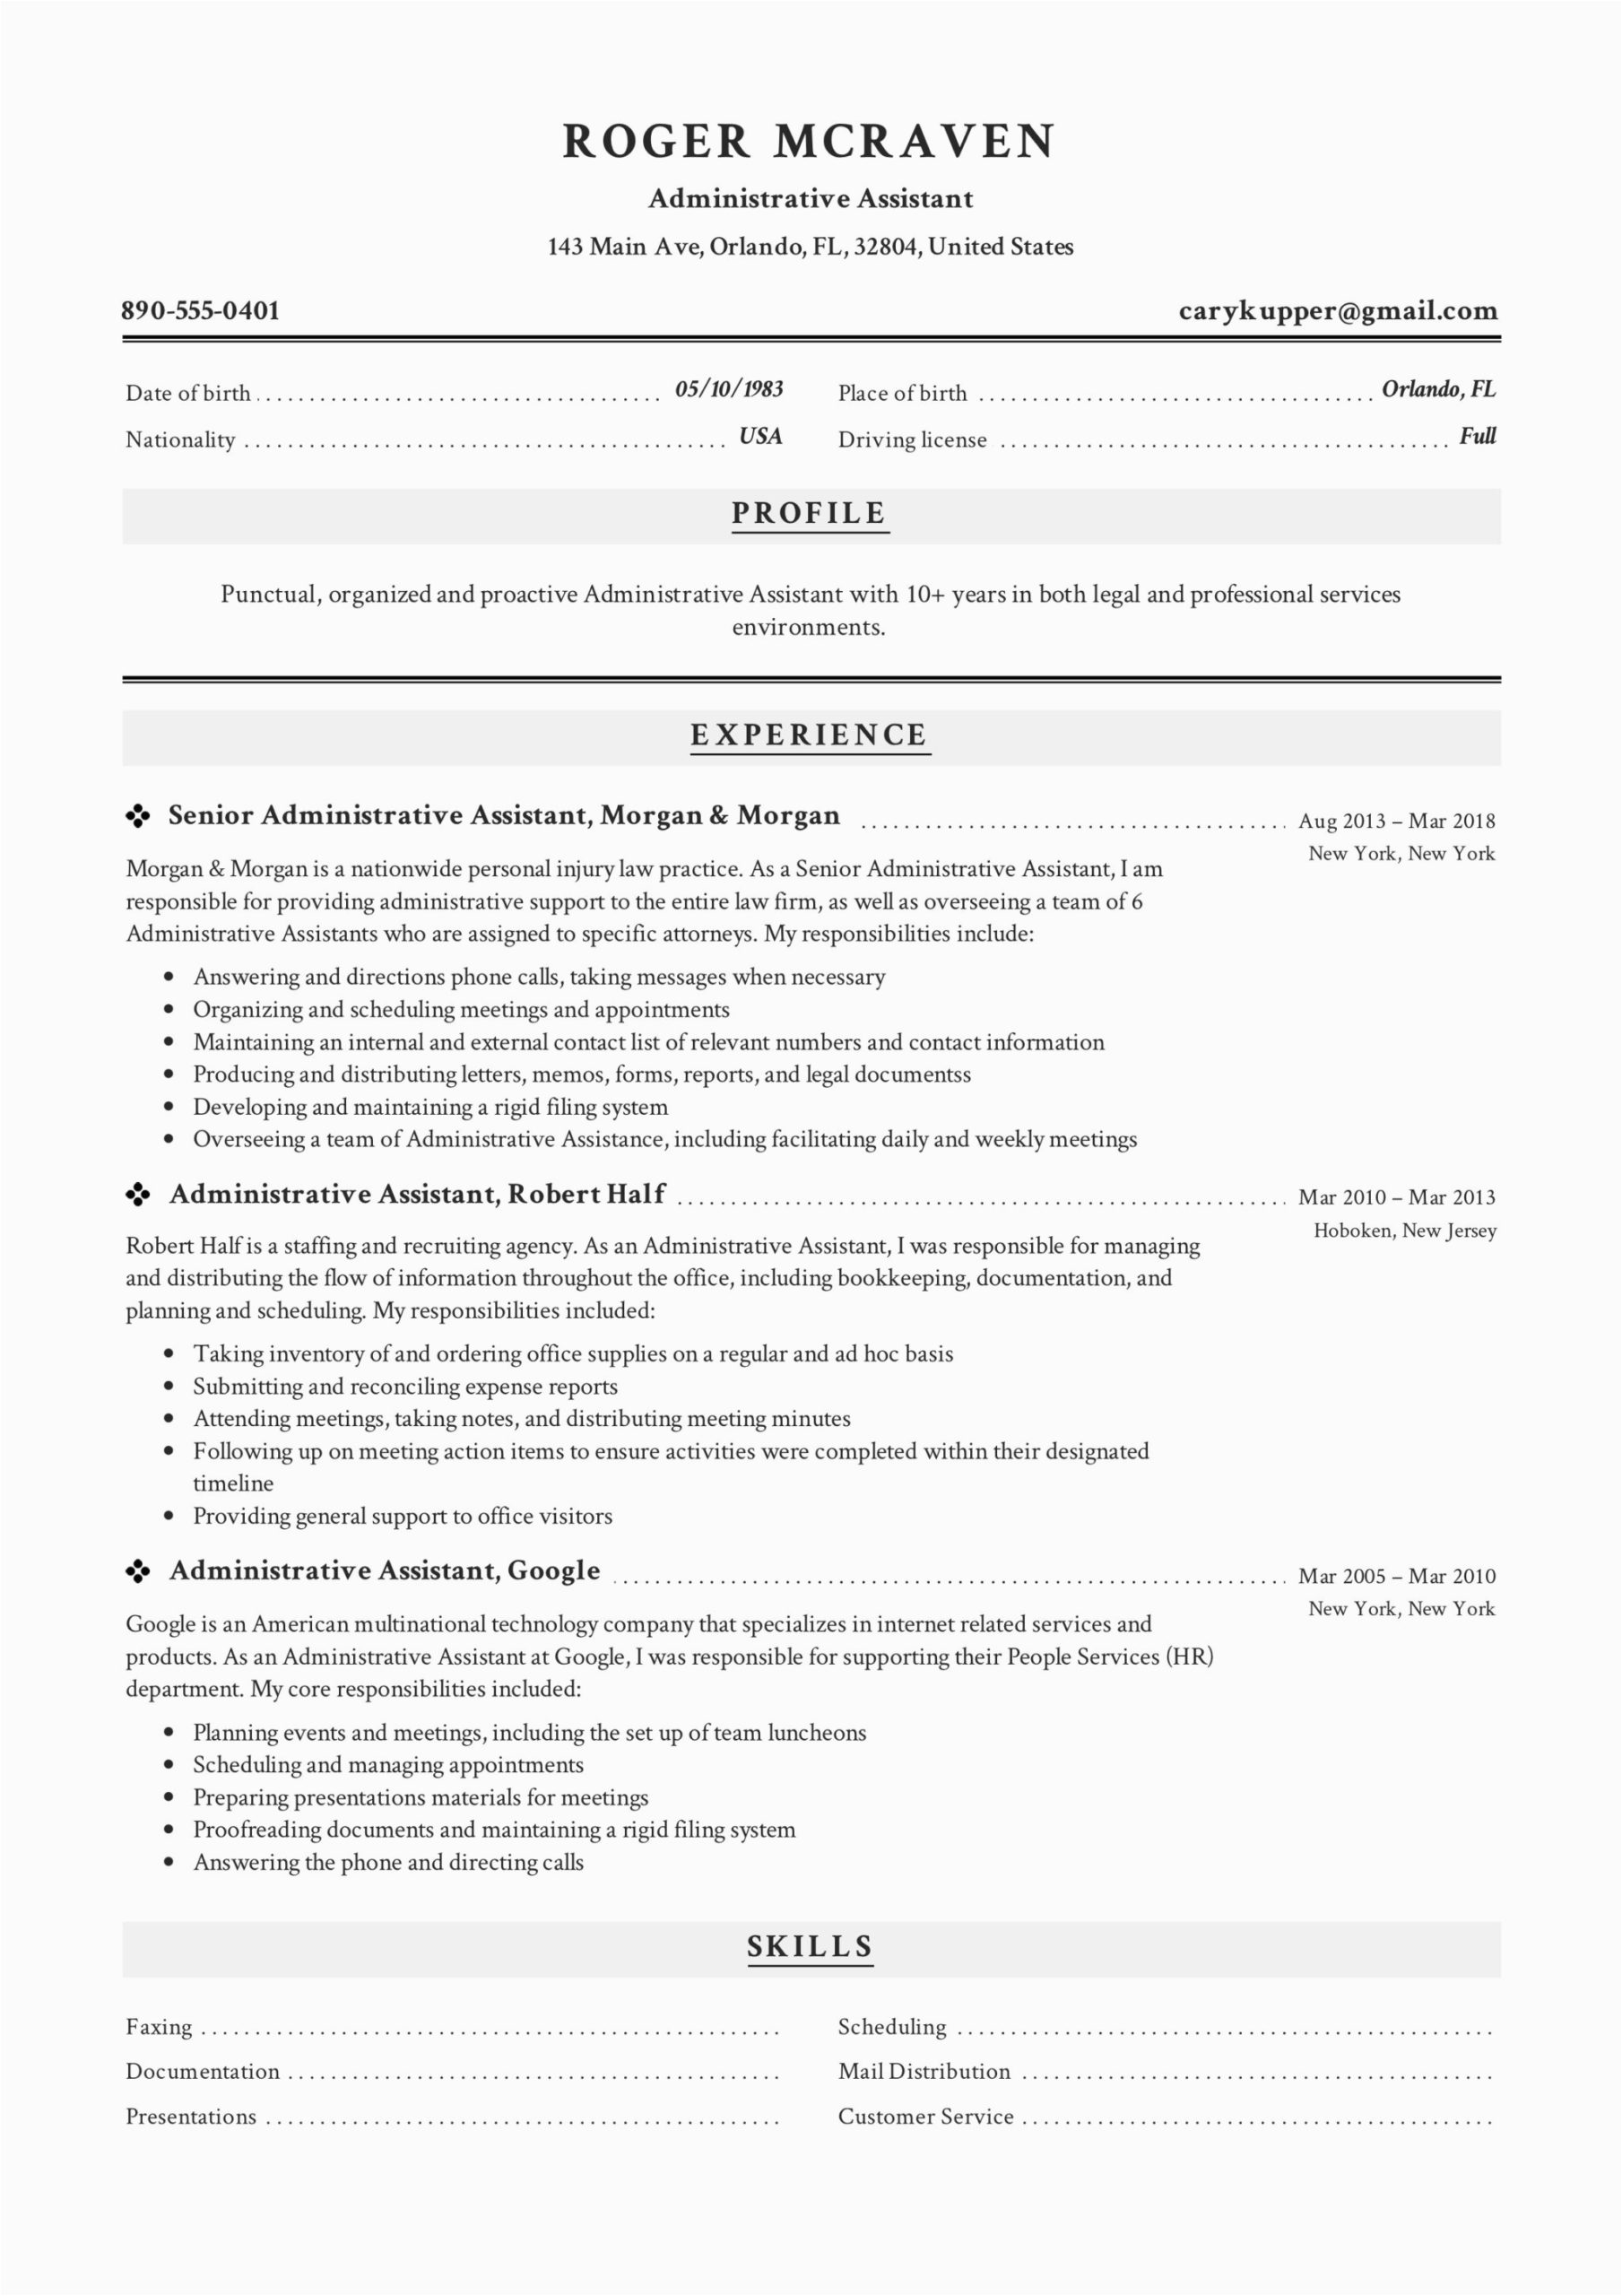 Sample Resume format for Administrative assistant 19 Free Administrative assistant Resumes & Writing Guide